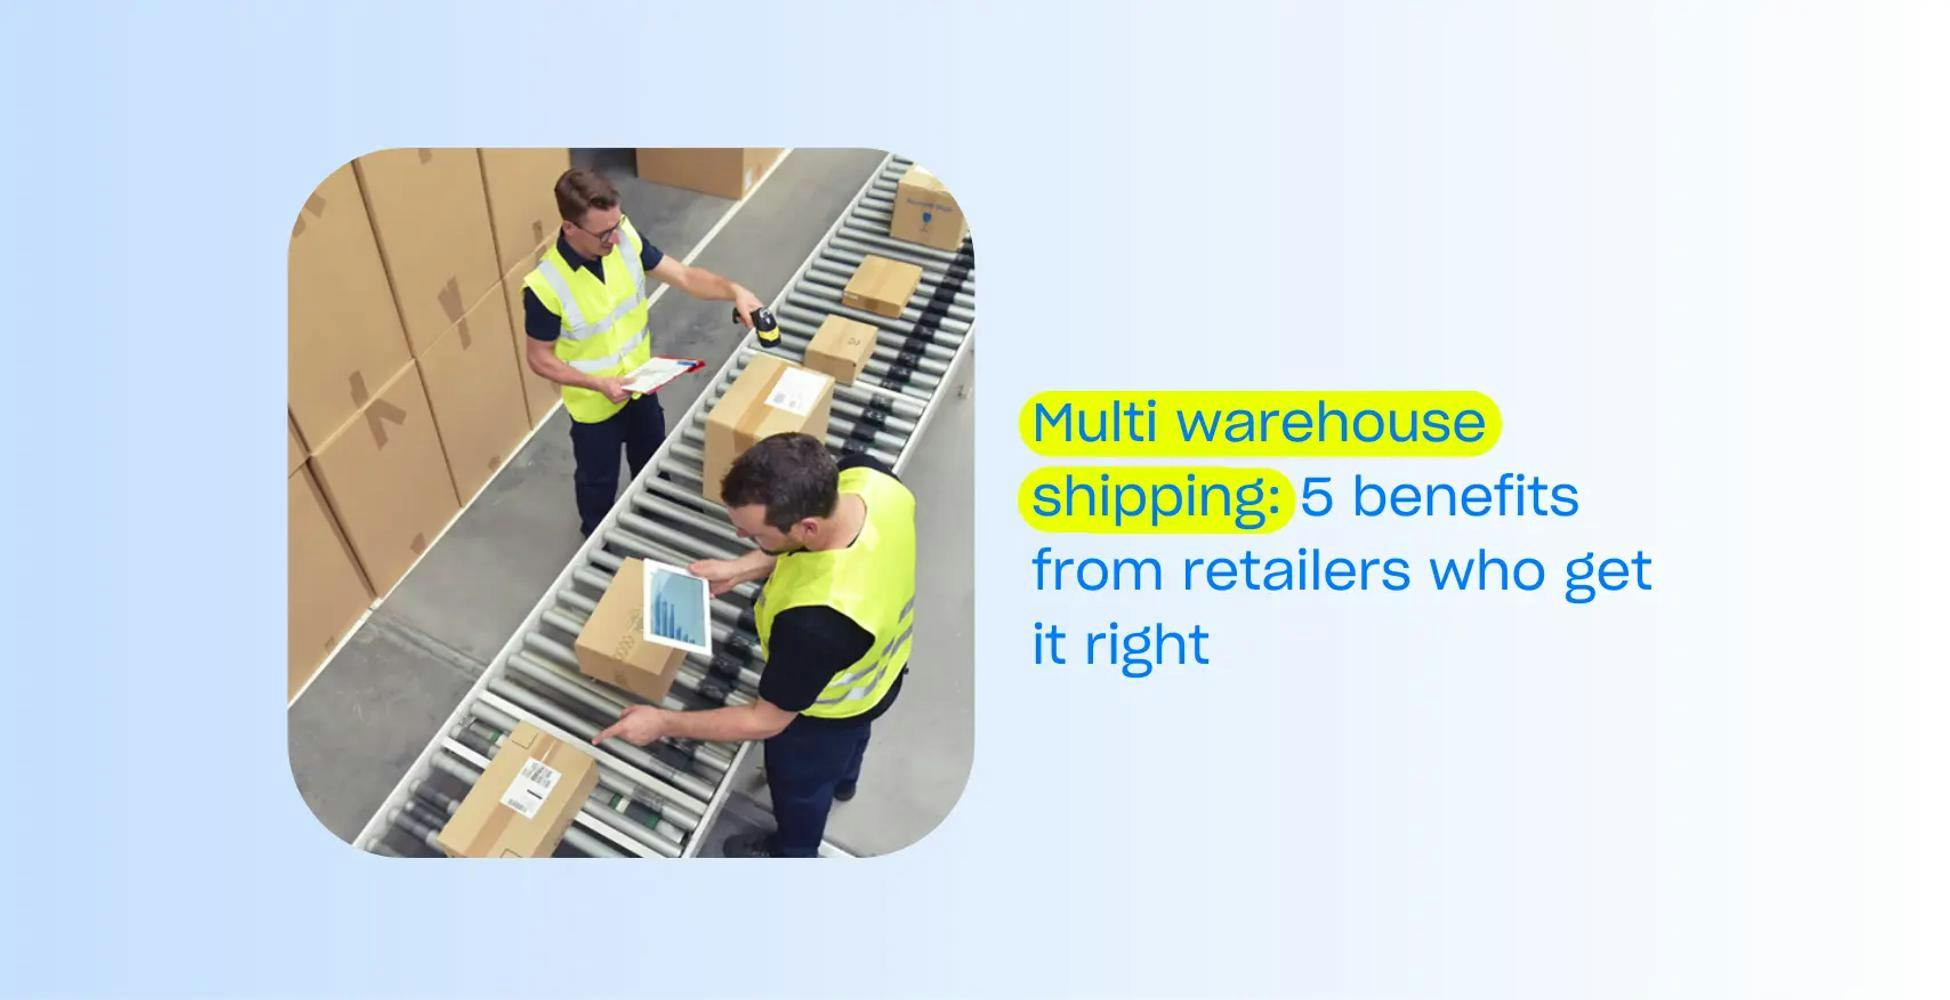 Multi warehouse shipping